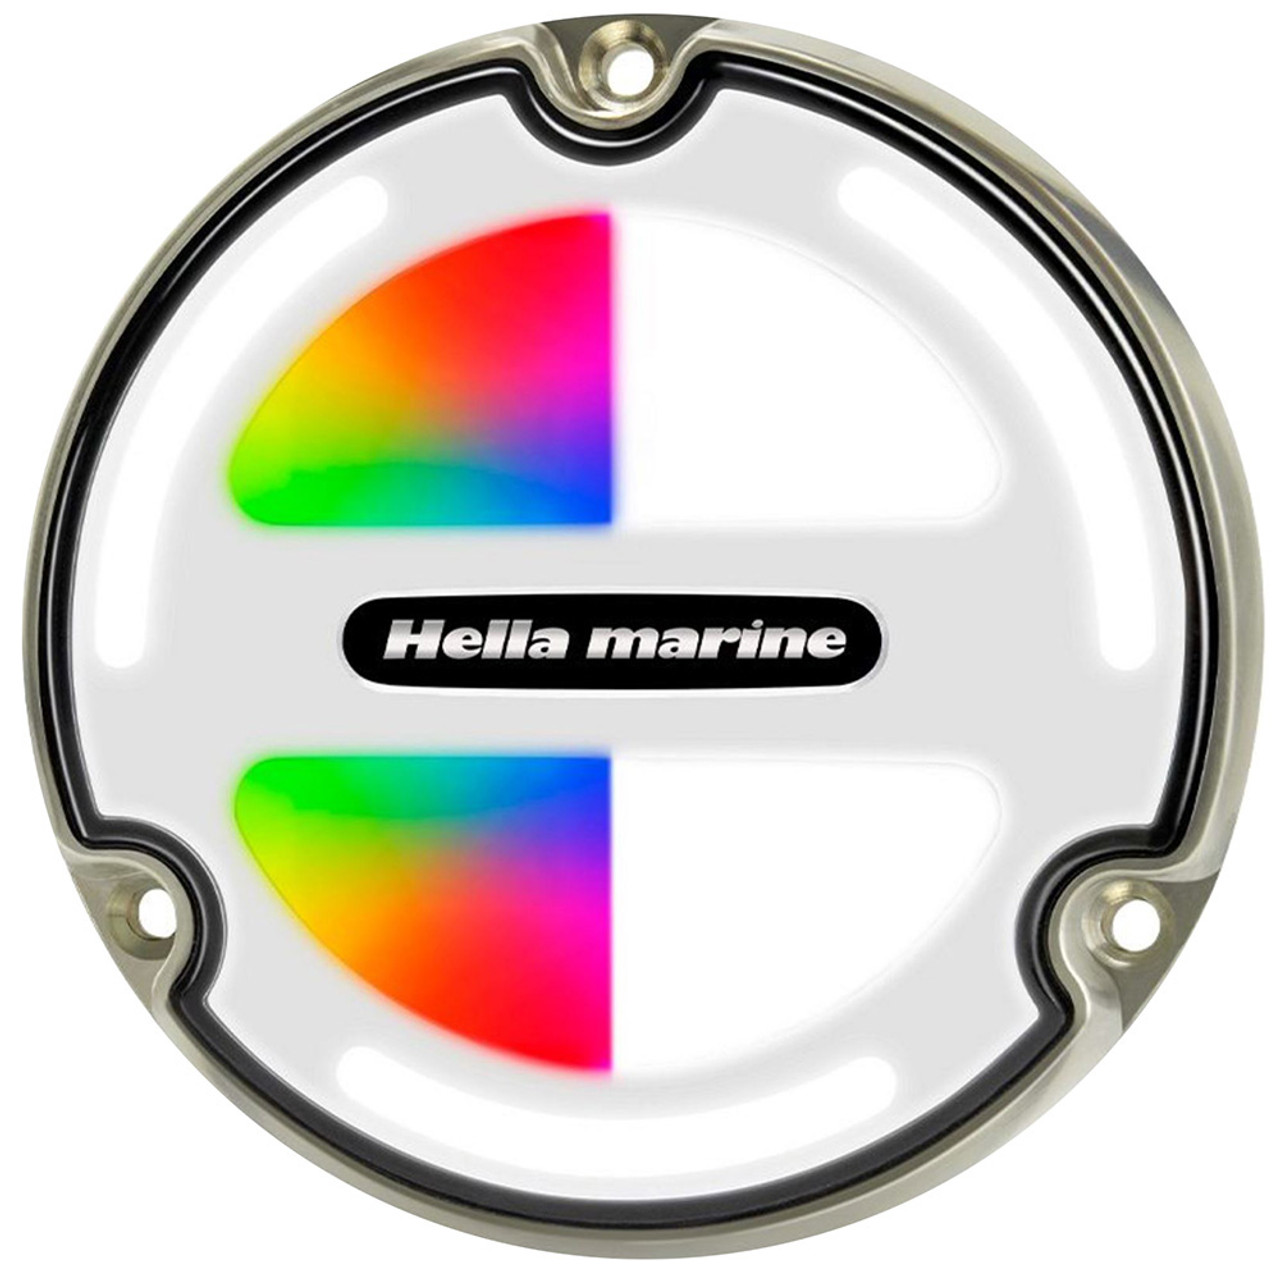 Hella Marine Apelo A3 RGBW Underwater Light - Bronze - White Lens [016831001]